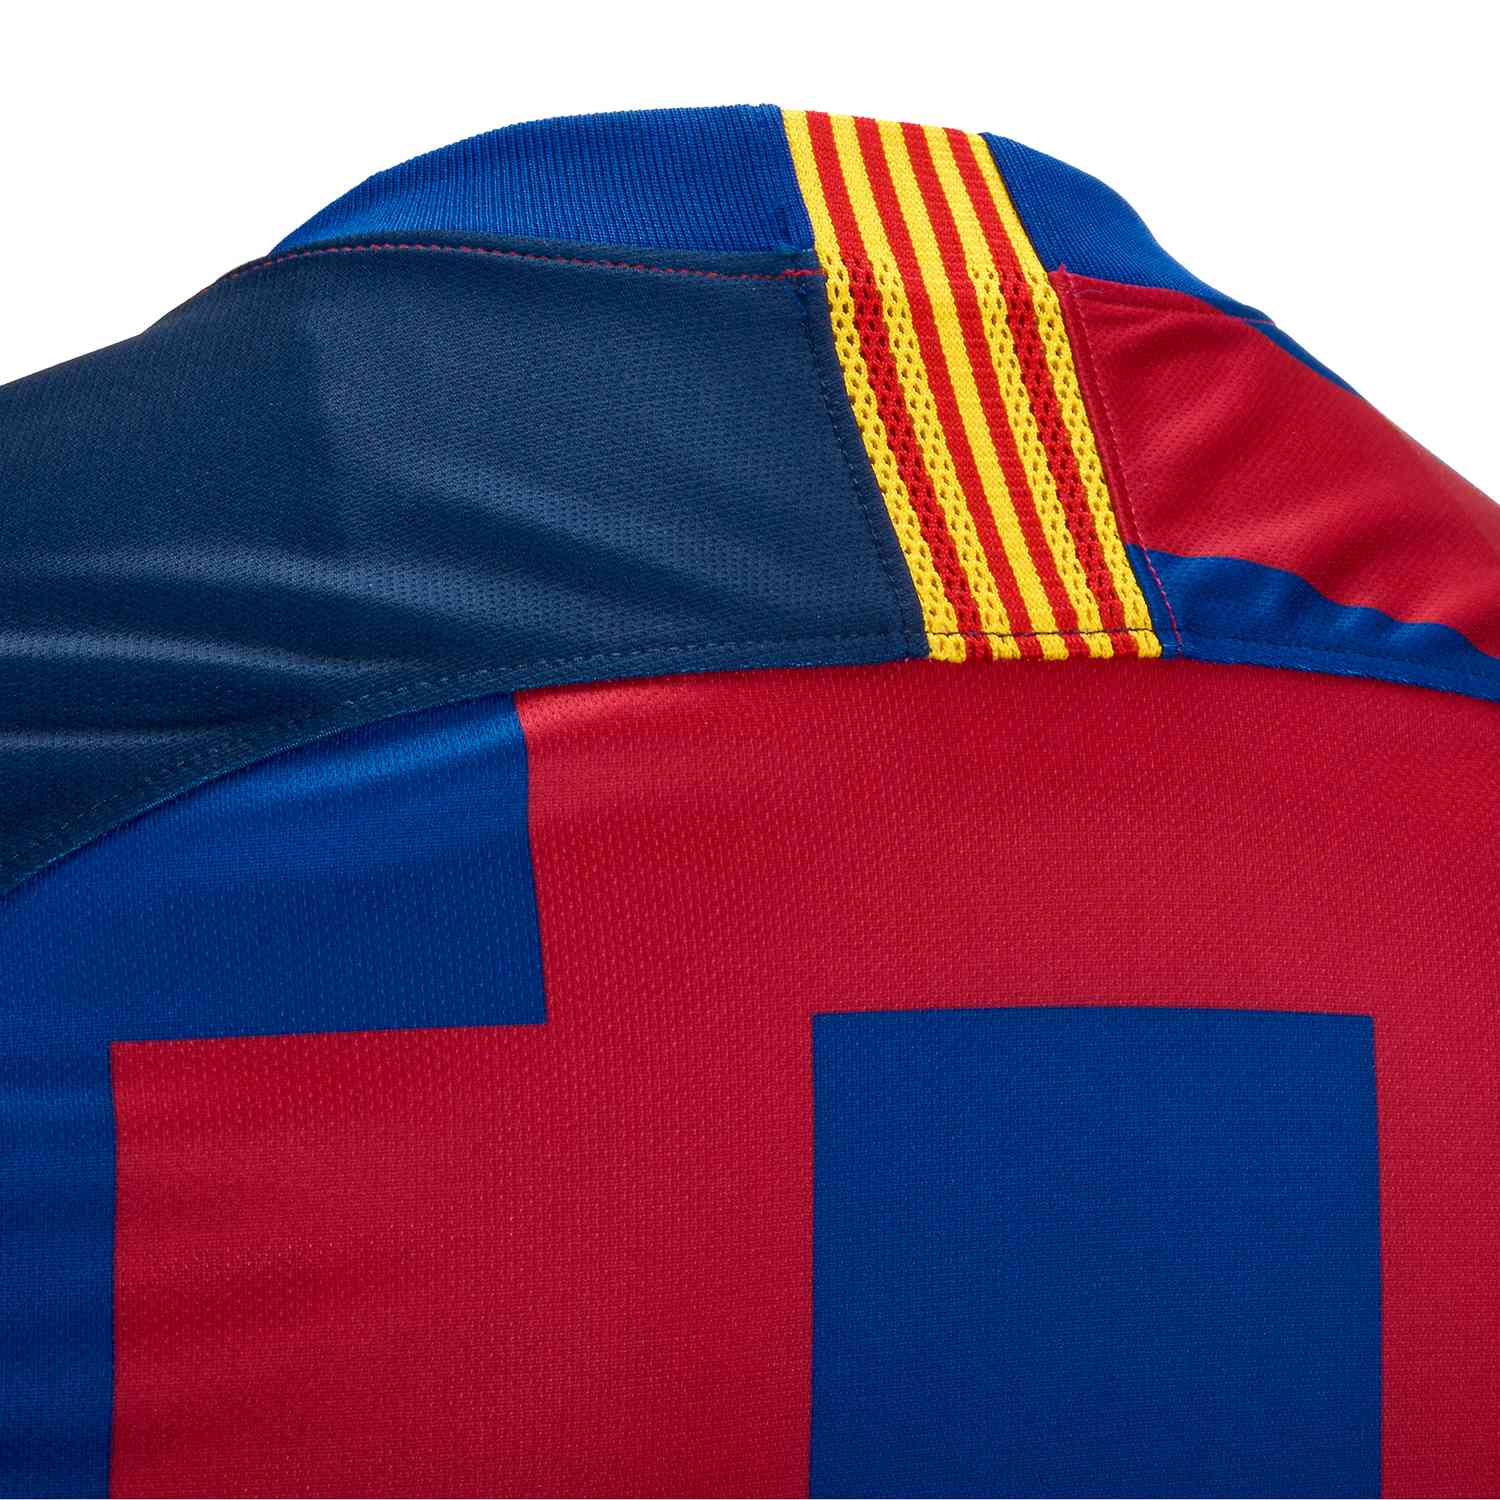 fc barcelona 20th anniversary jersey